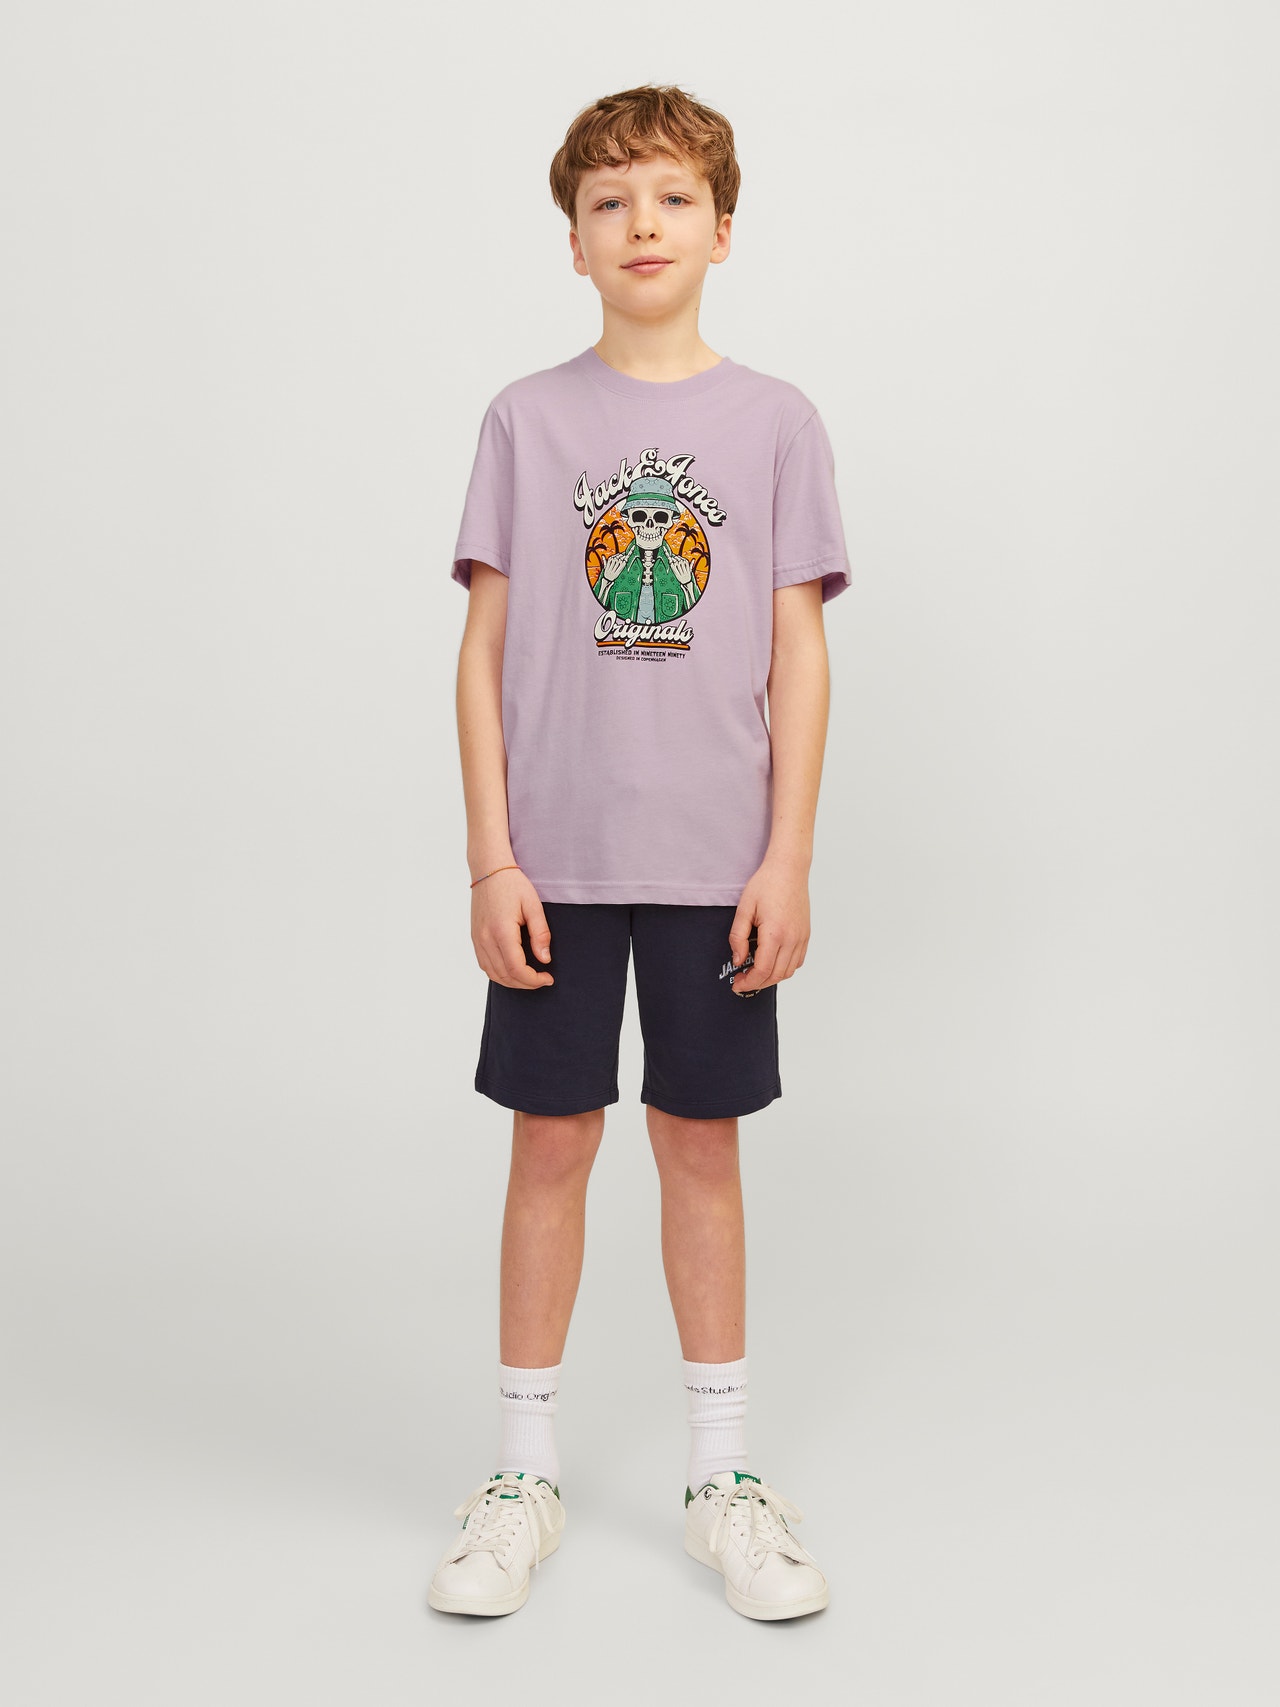 Jack & Jones Nadruk T-shirt Dla chłopców -Lavender Frost - 12257131